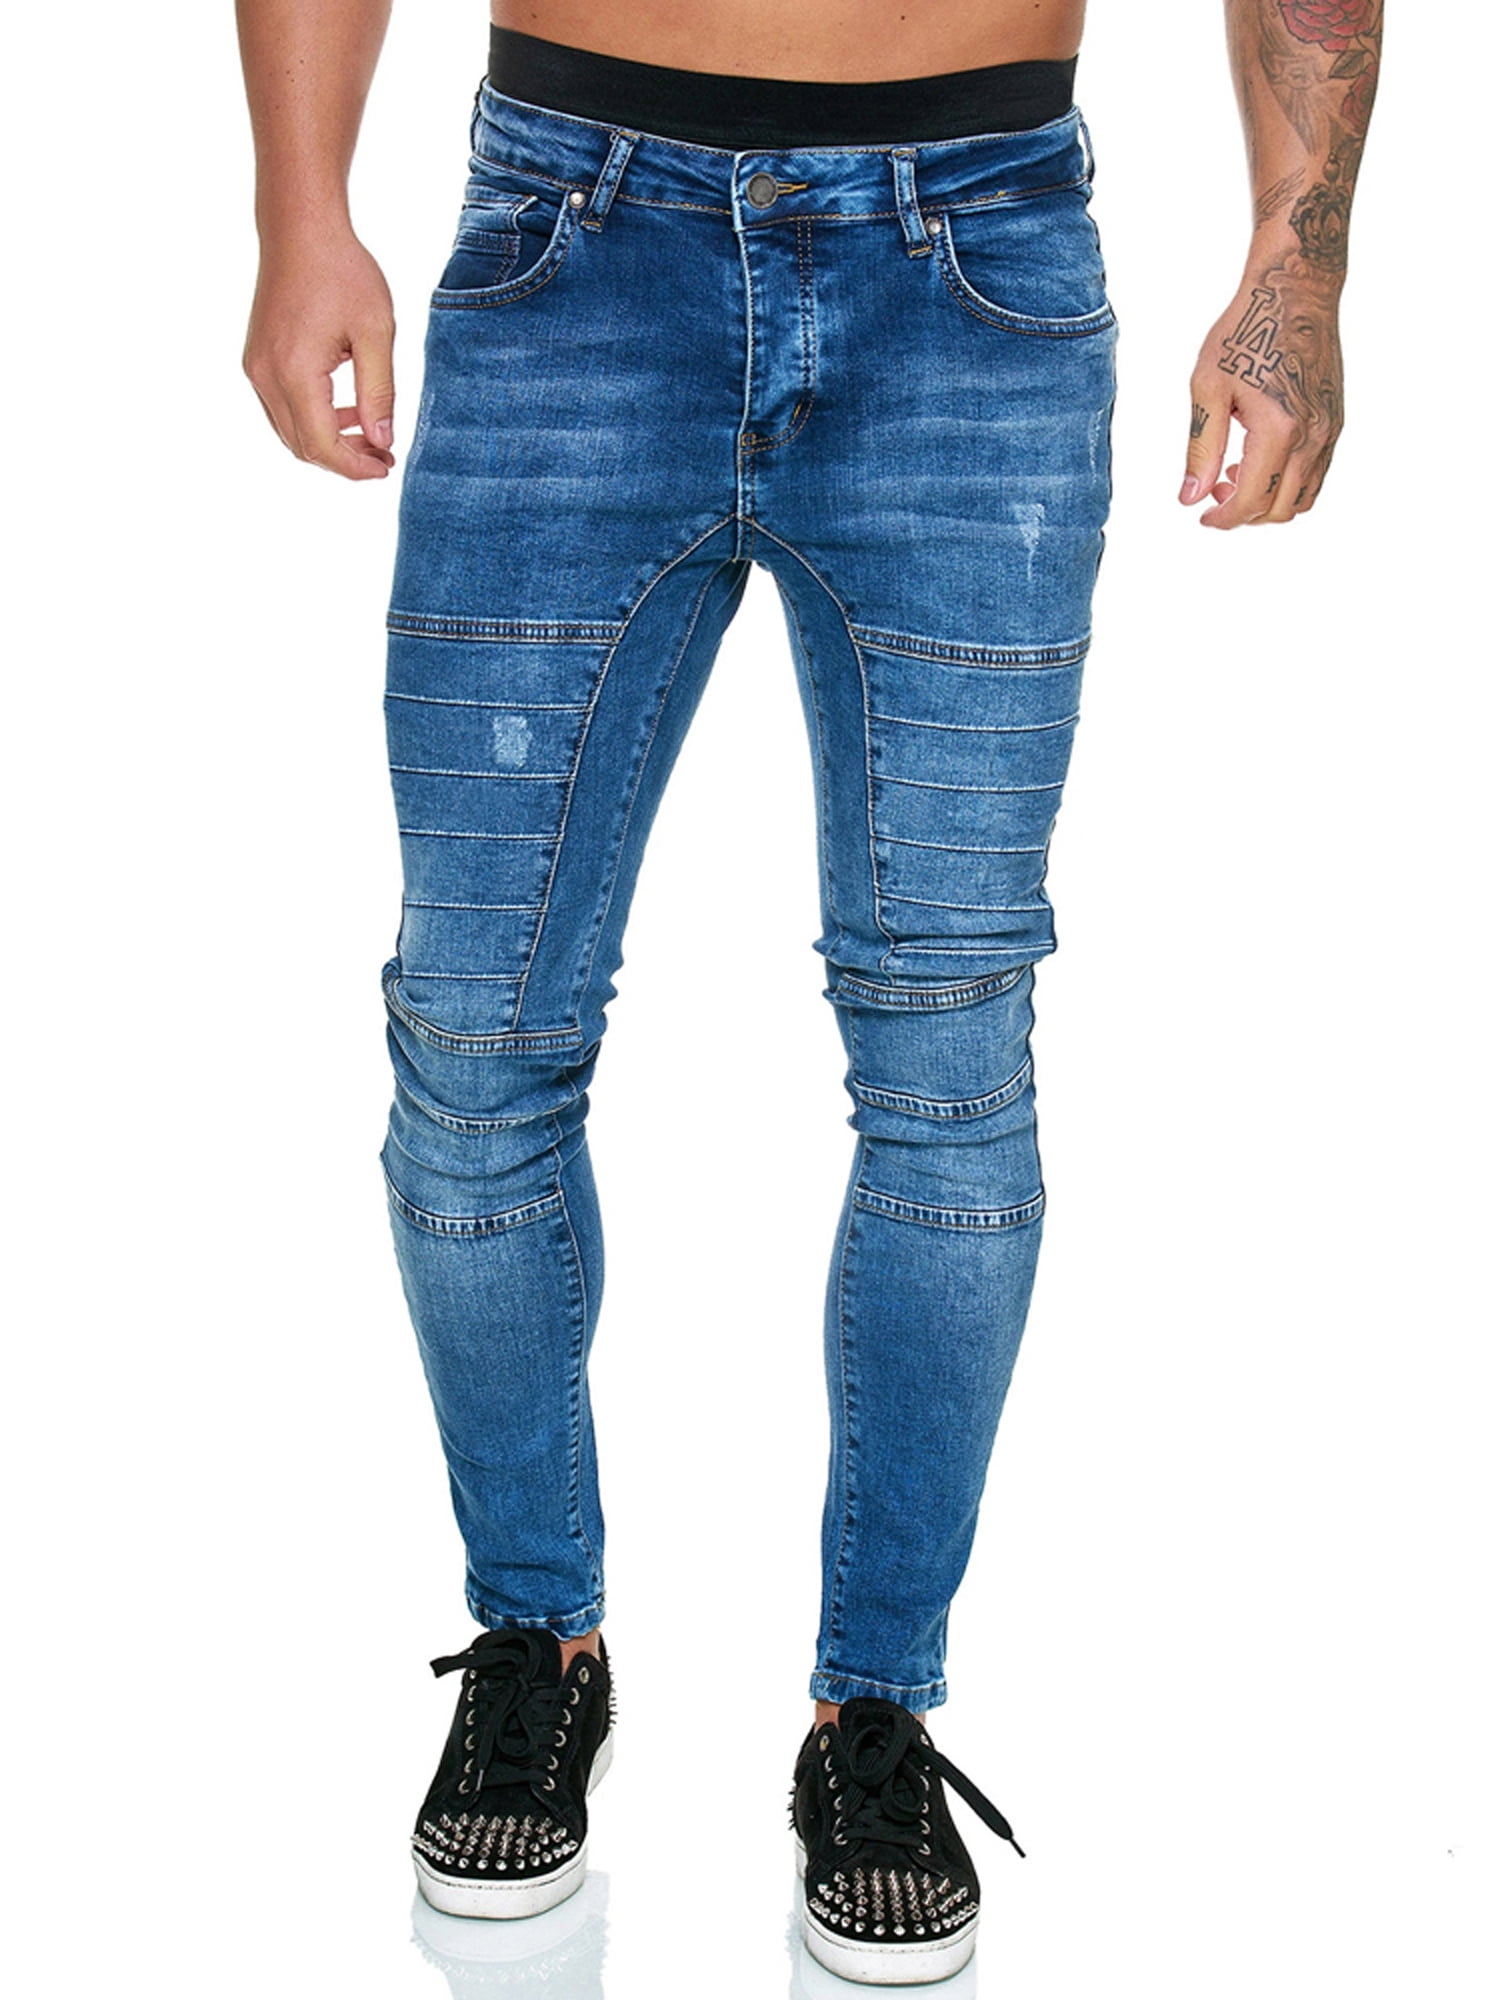 skinny tight jeans mens